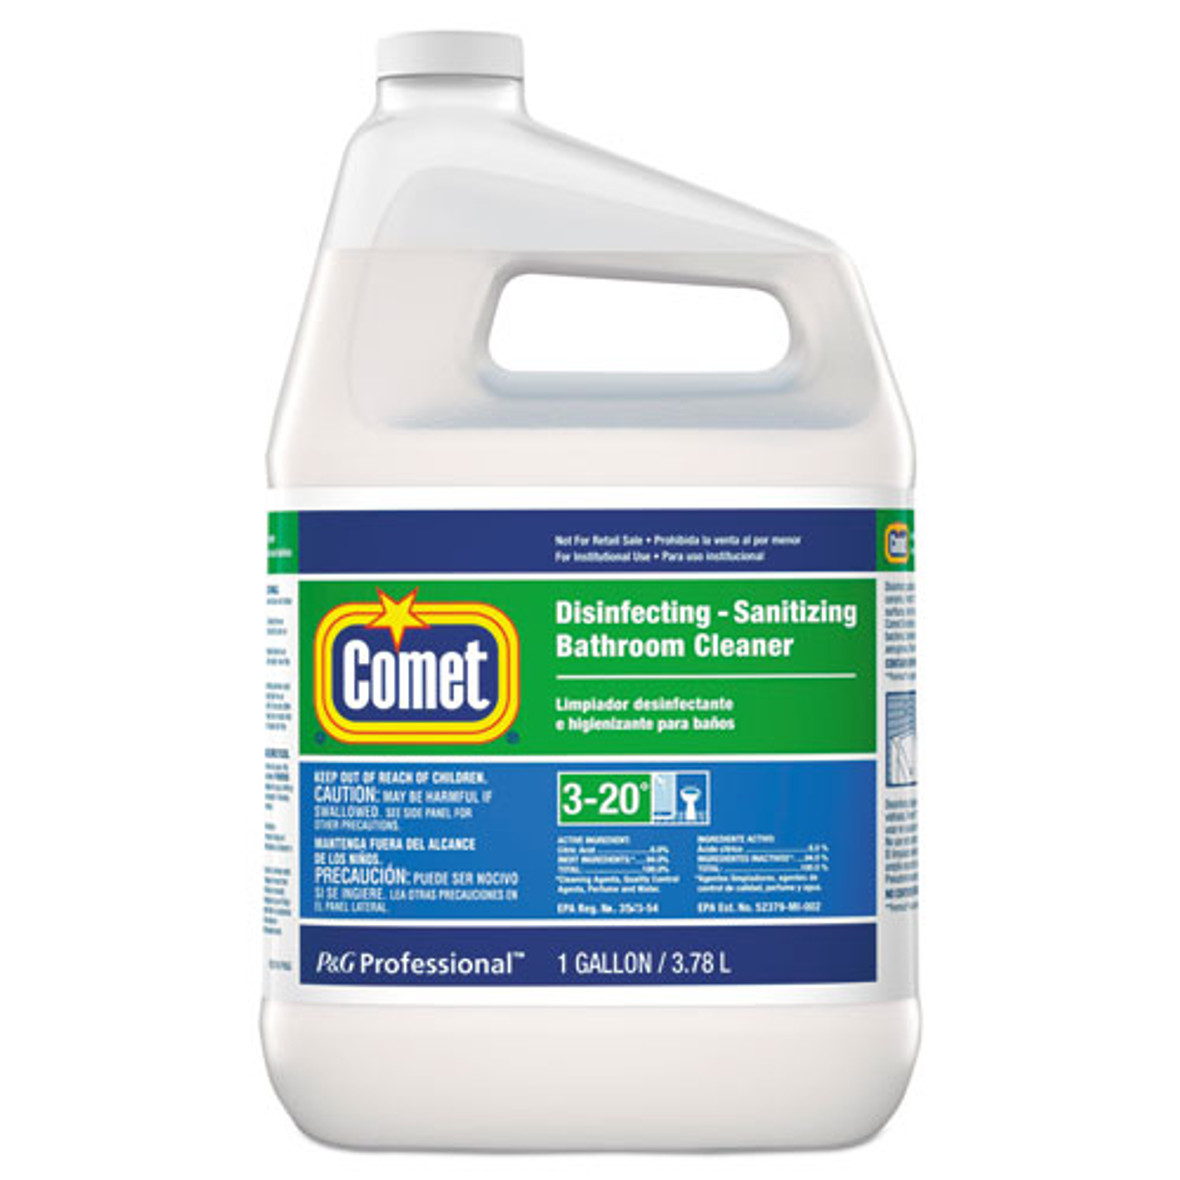 Procter & Gamble Comet Disinfecting-Sanitizing Bathroom Cleaner, Citrus